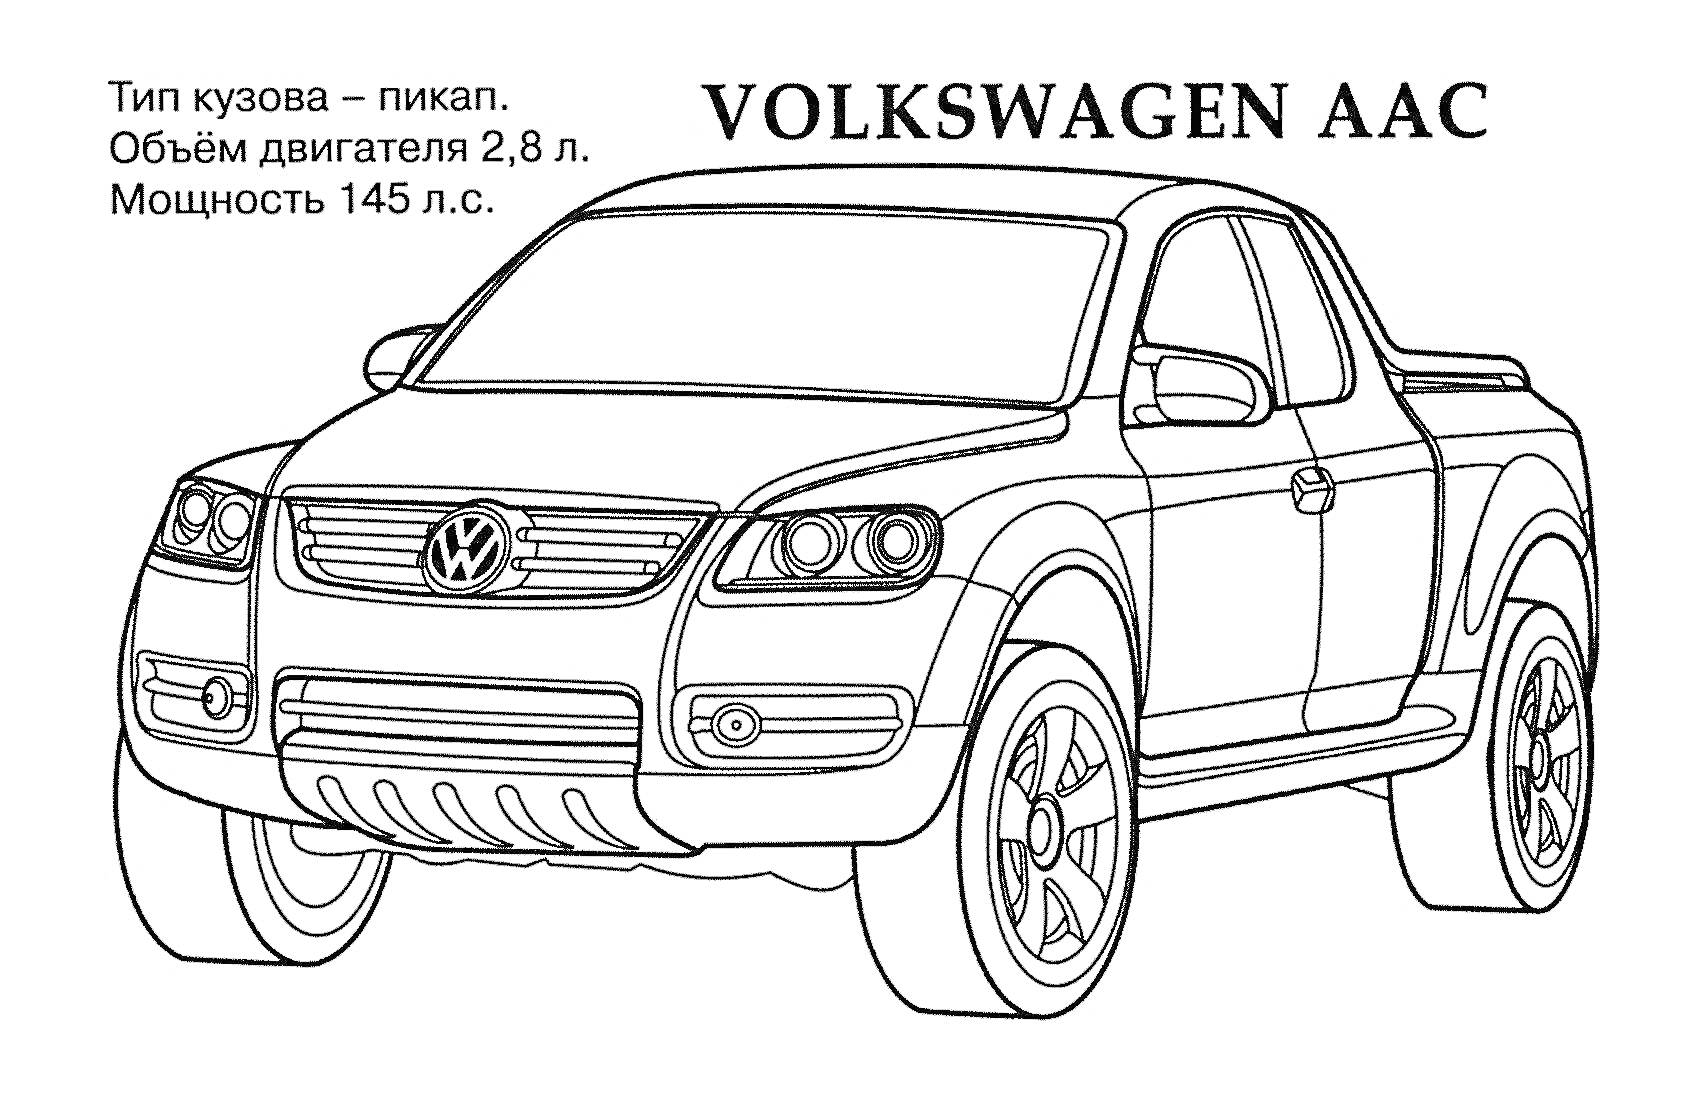 Раскраска Volkswagen AAC с техническими характеристиками (тип кузова - пикап, объем двигателя 2.8 л, мощность 145 л.с.)